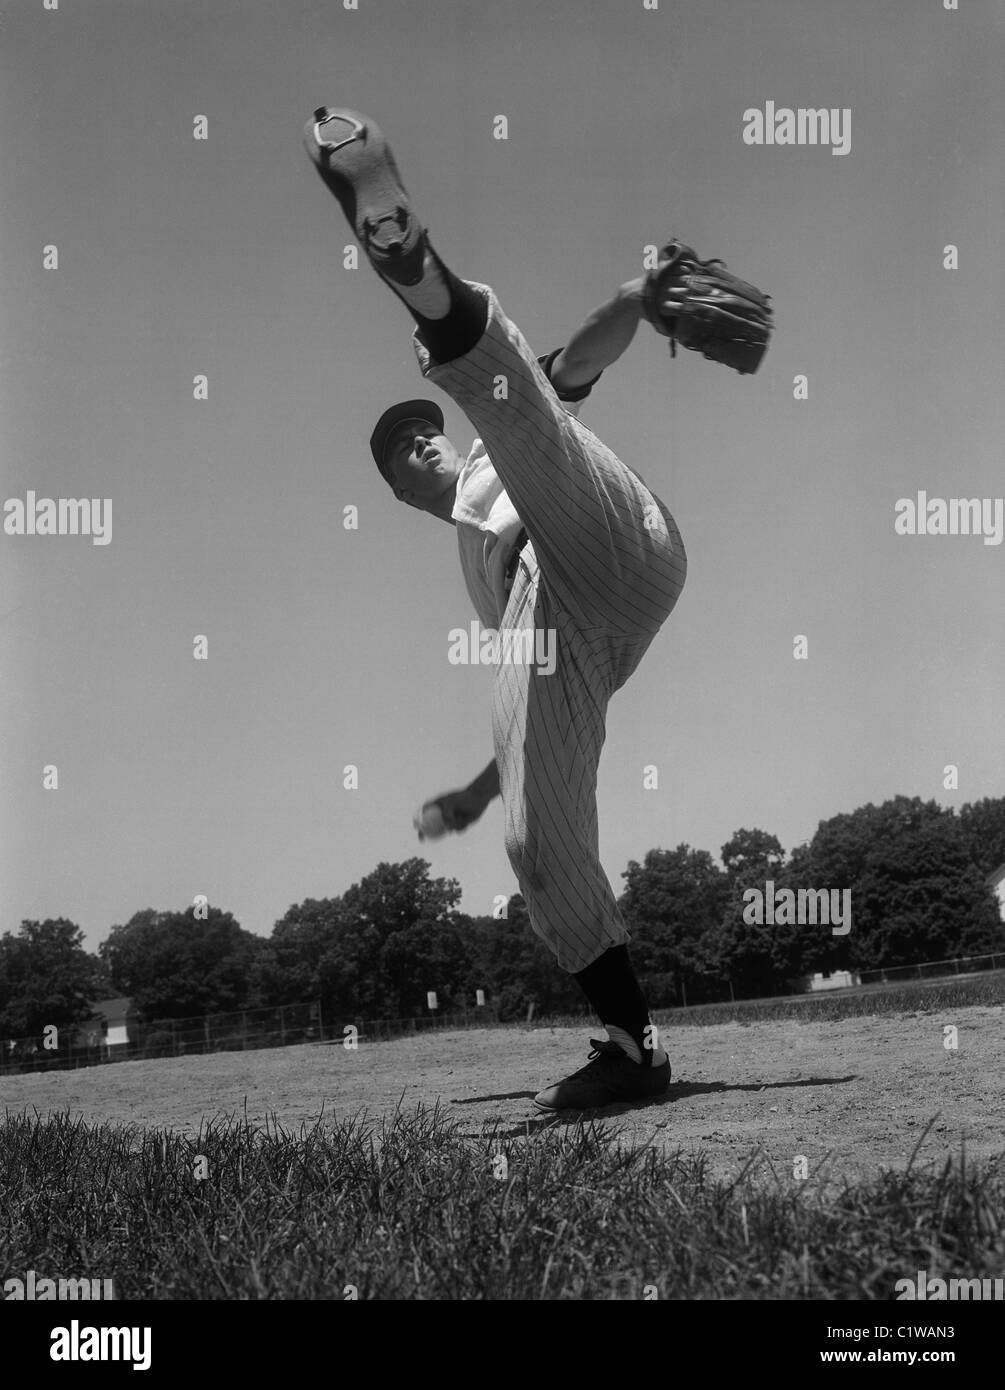 Baseball pitcher standing on one leg Stock Photo